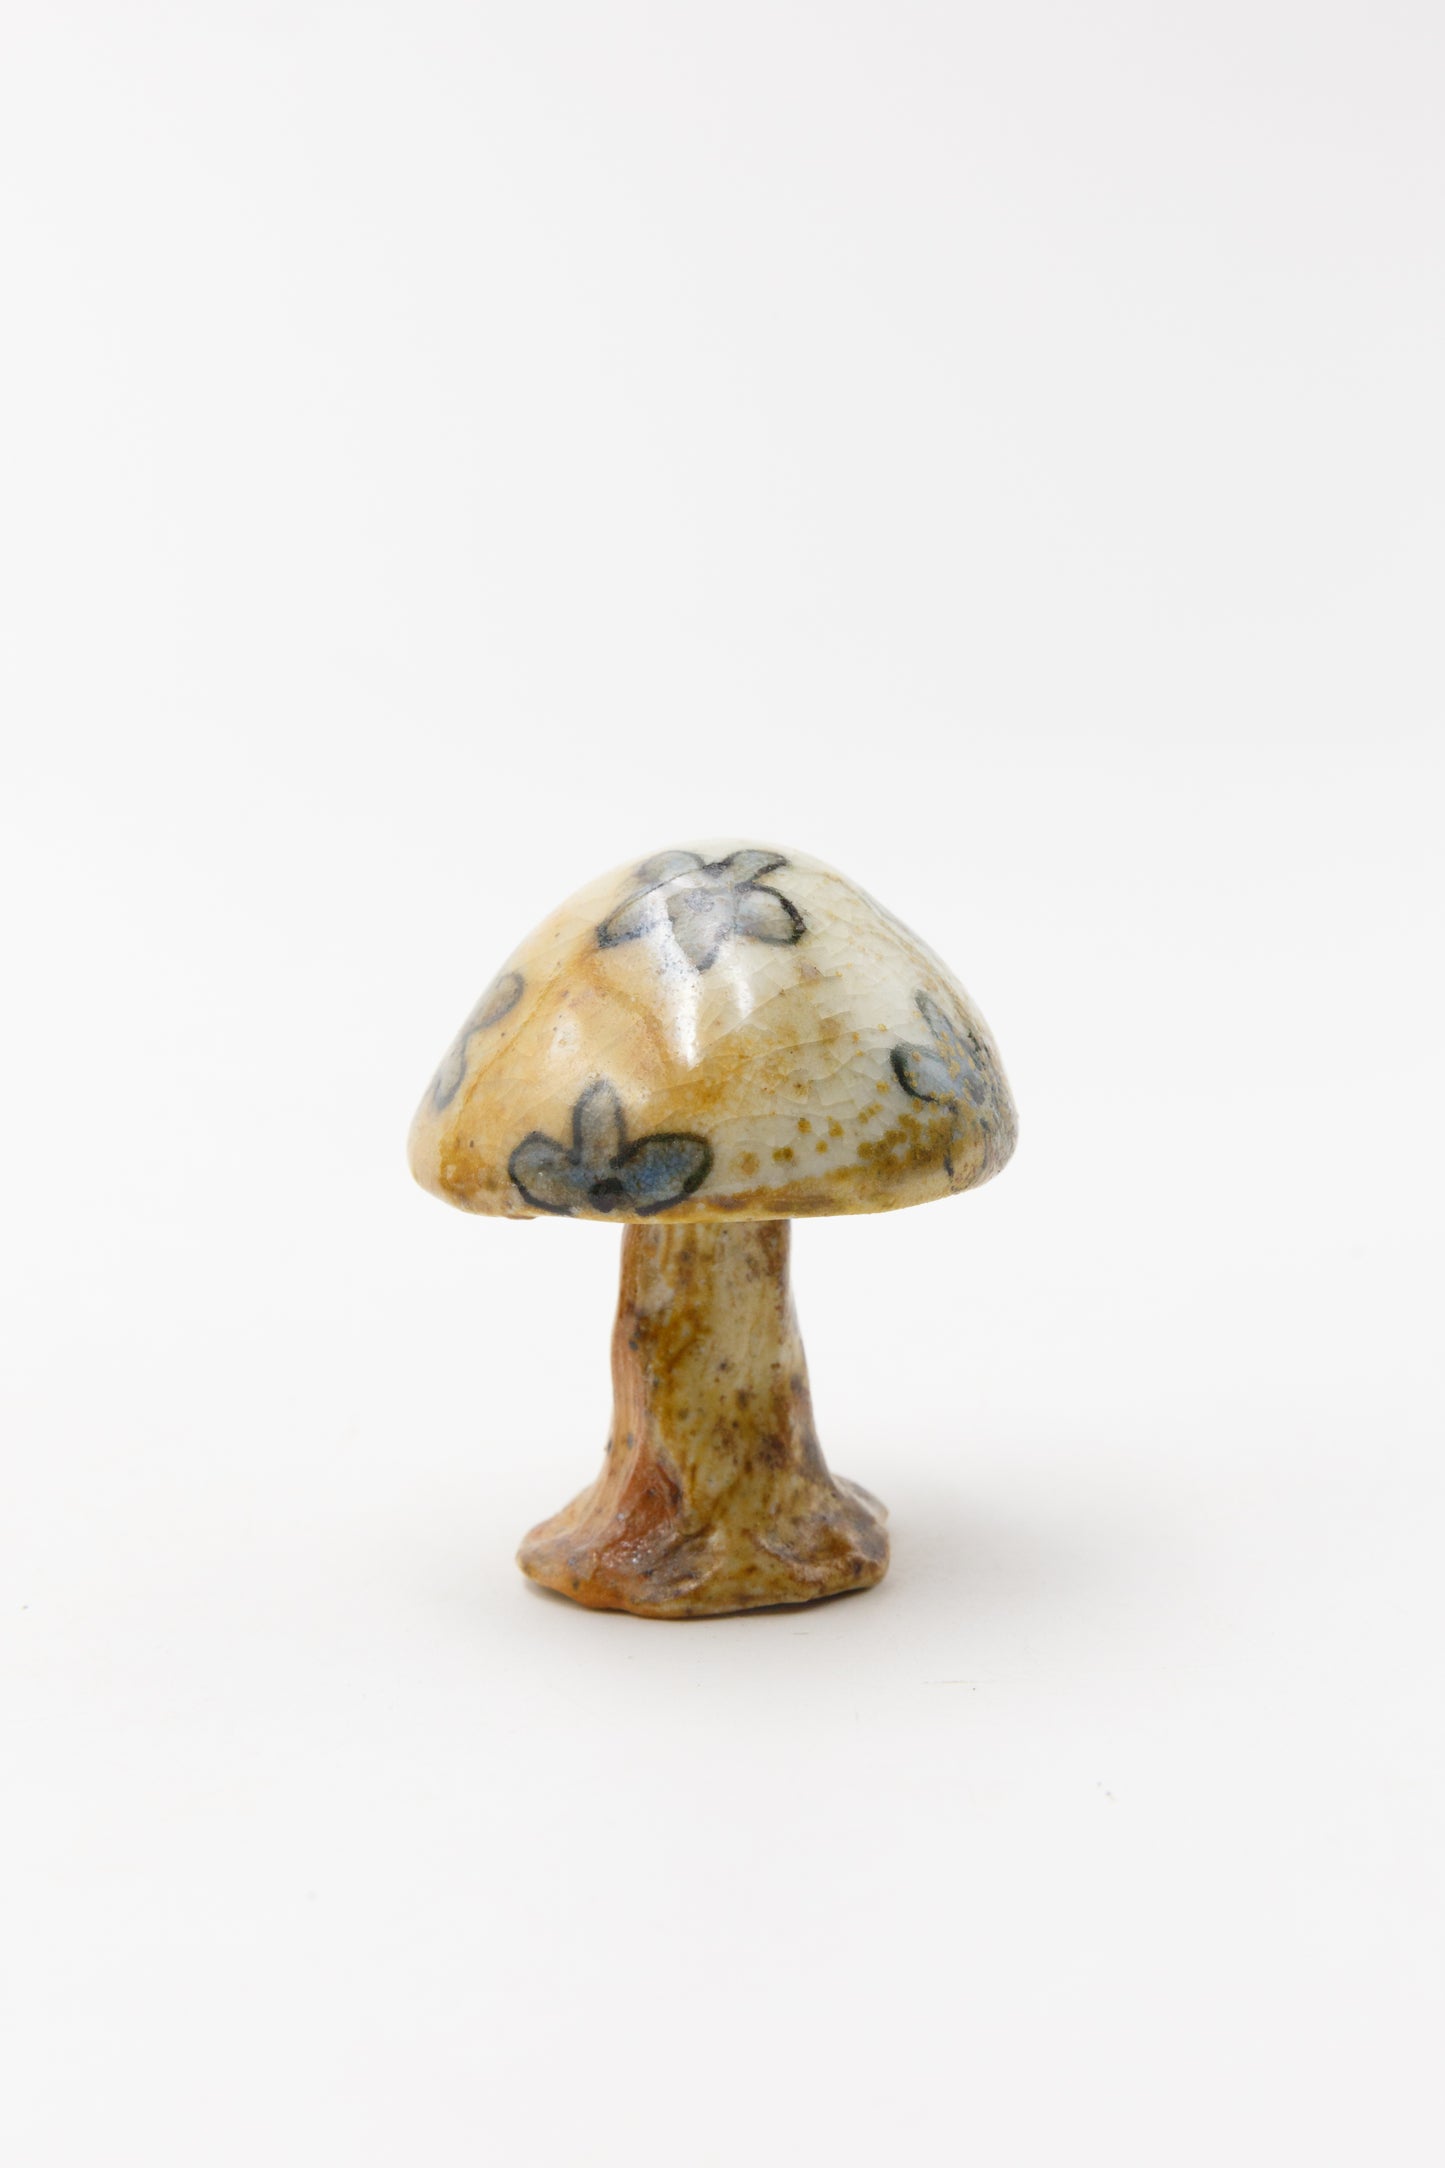 Wood Fired Mushrooms 002